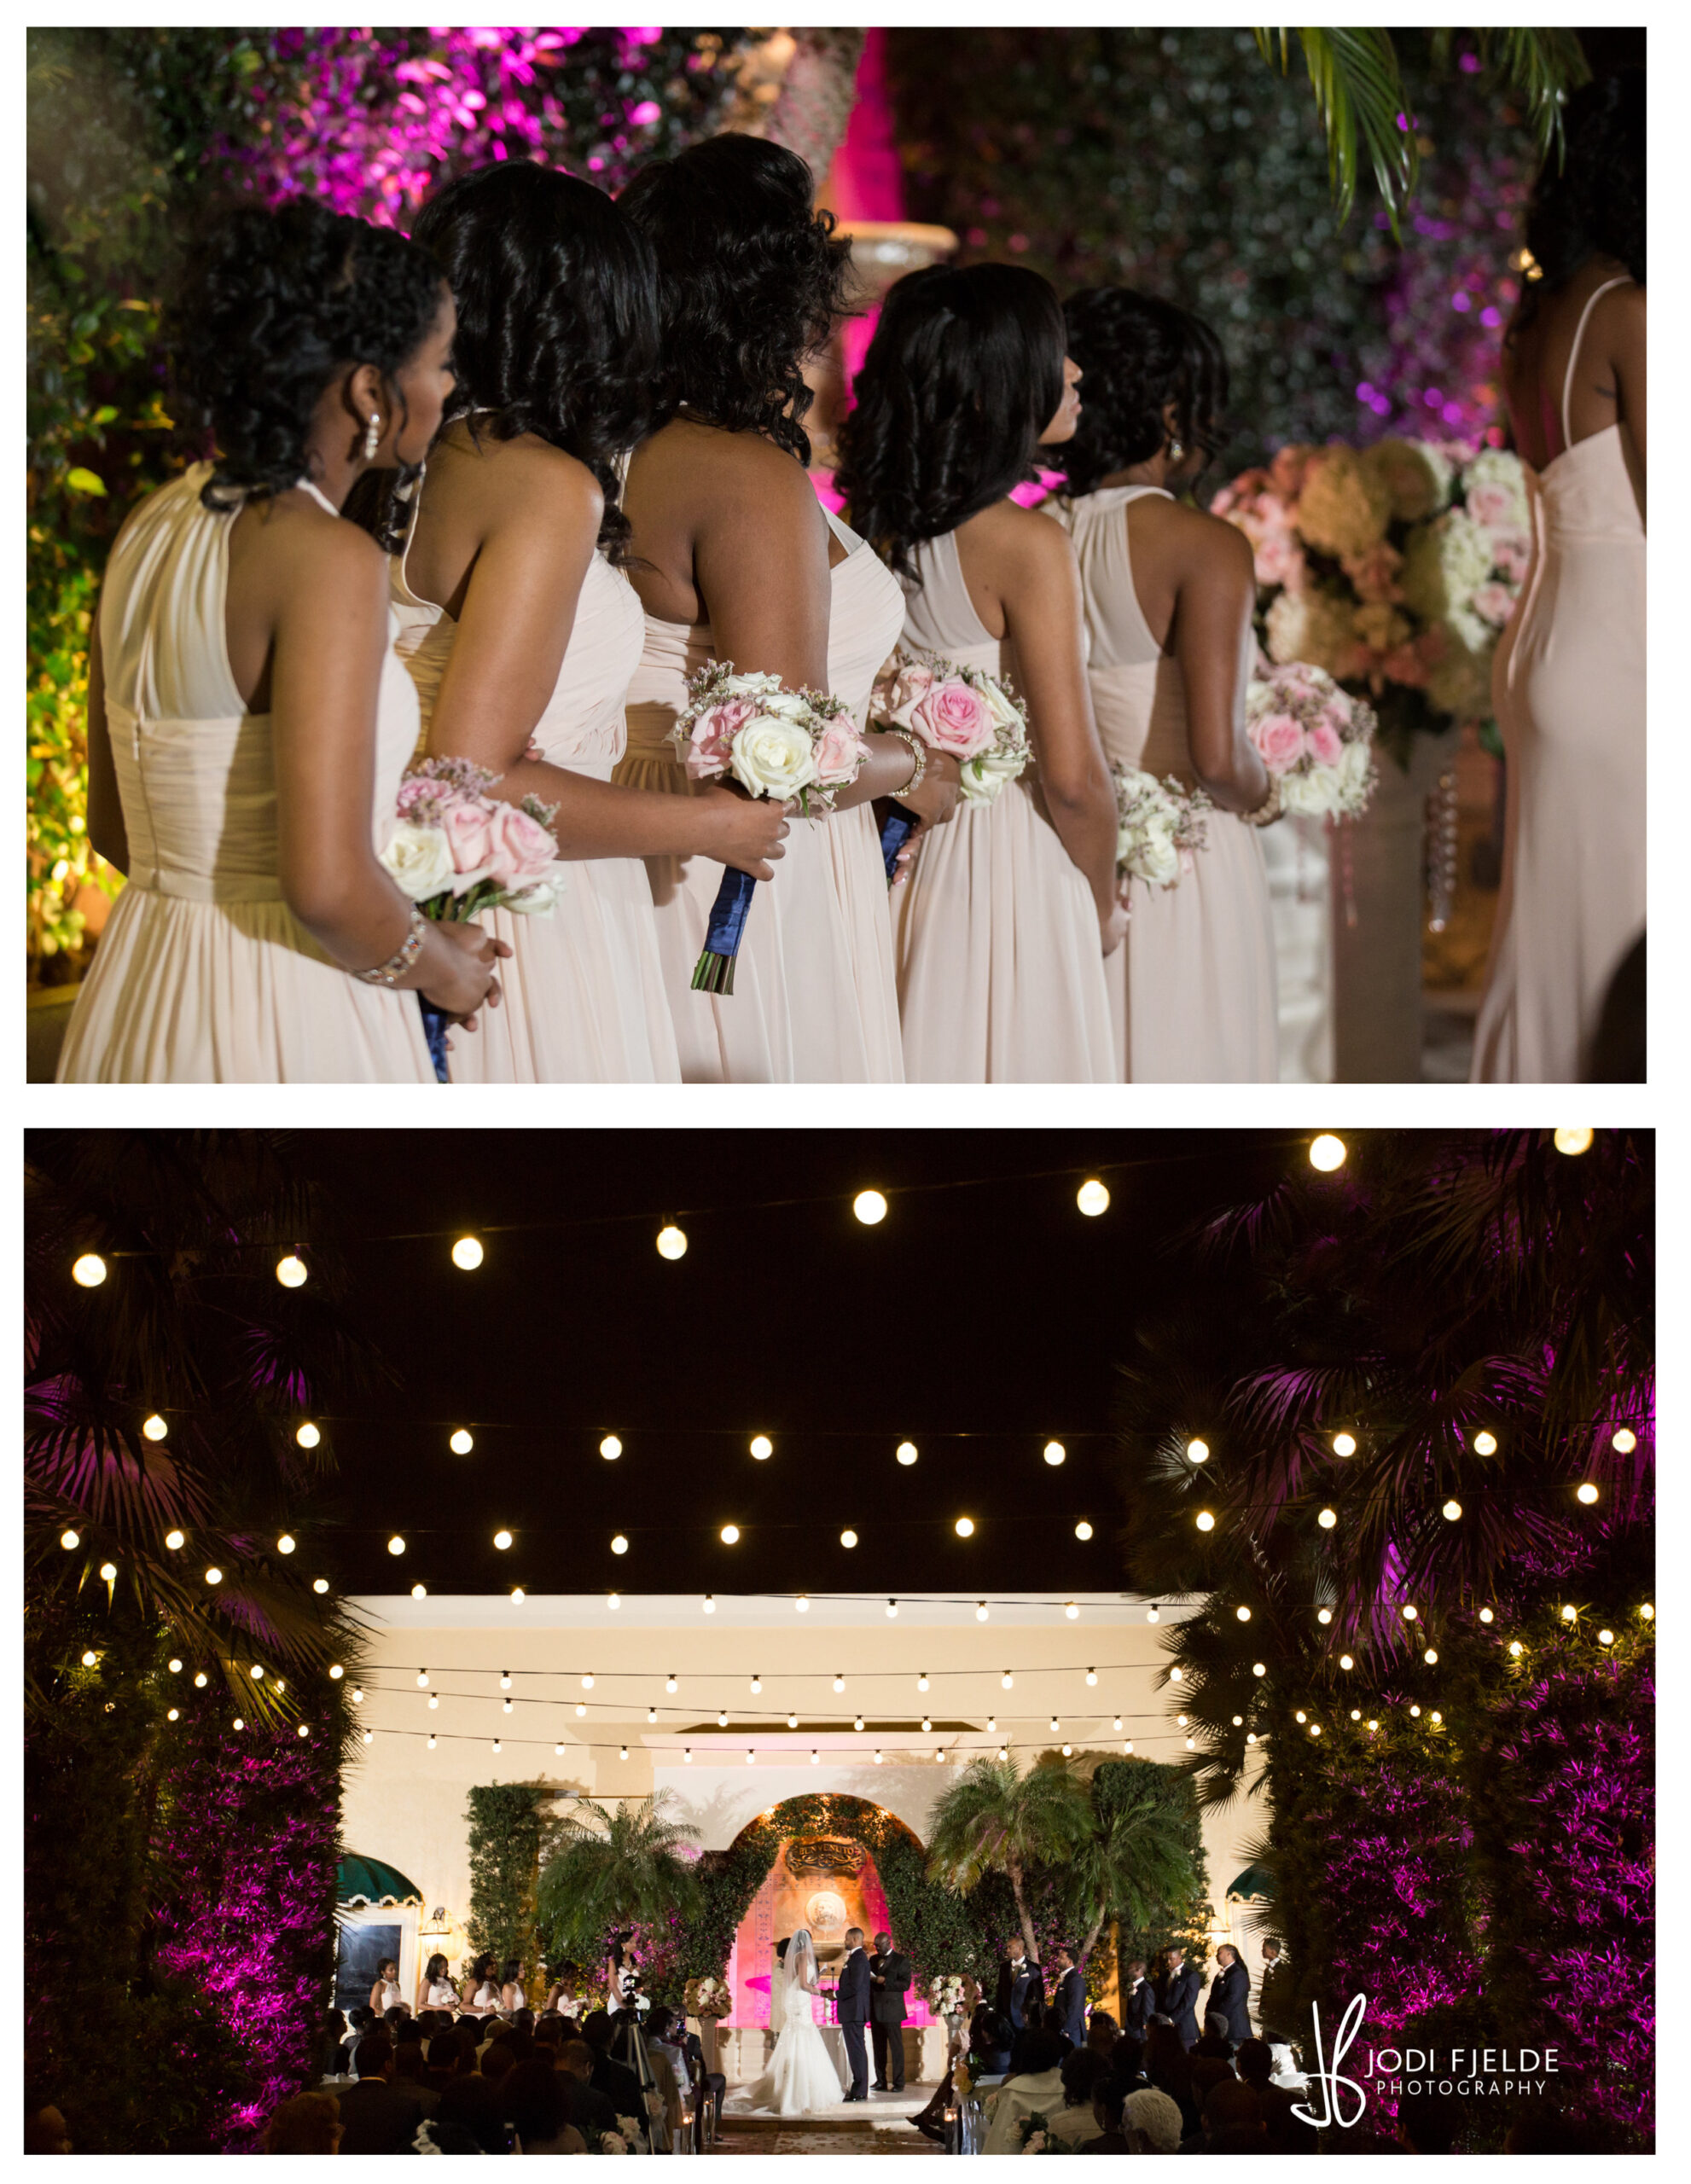 Benvenuto_wedding_Boynton_Beach_Jodi_Fjelde_Photography_Nikki_Otis_married_16.jpg